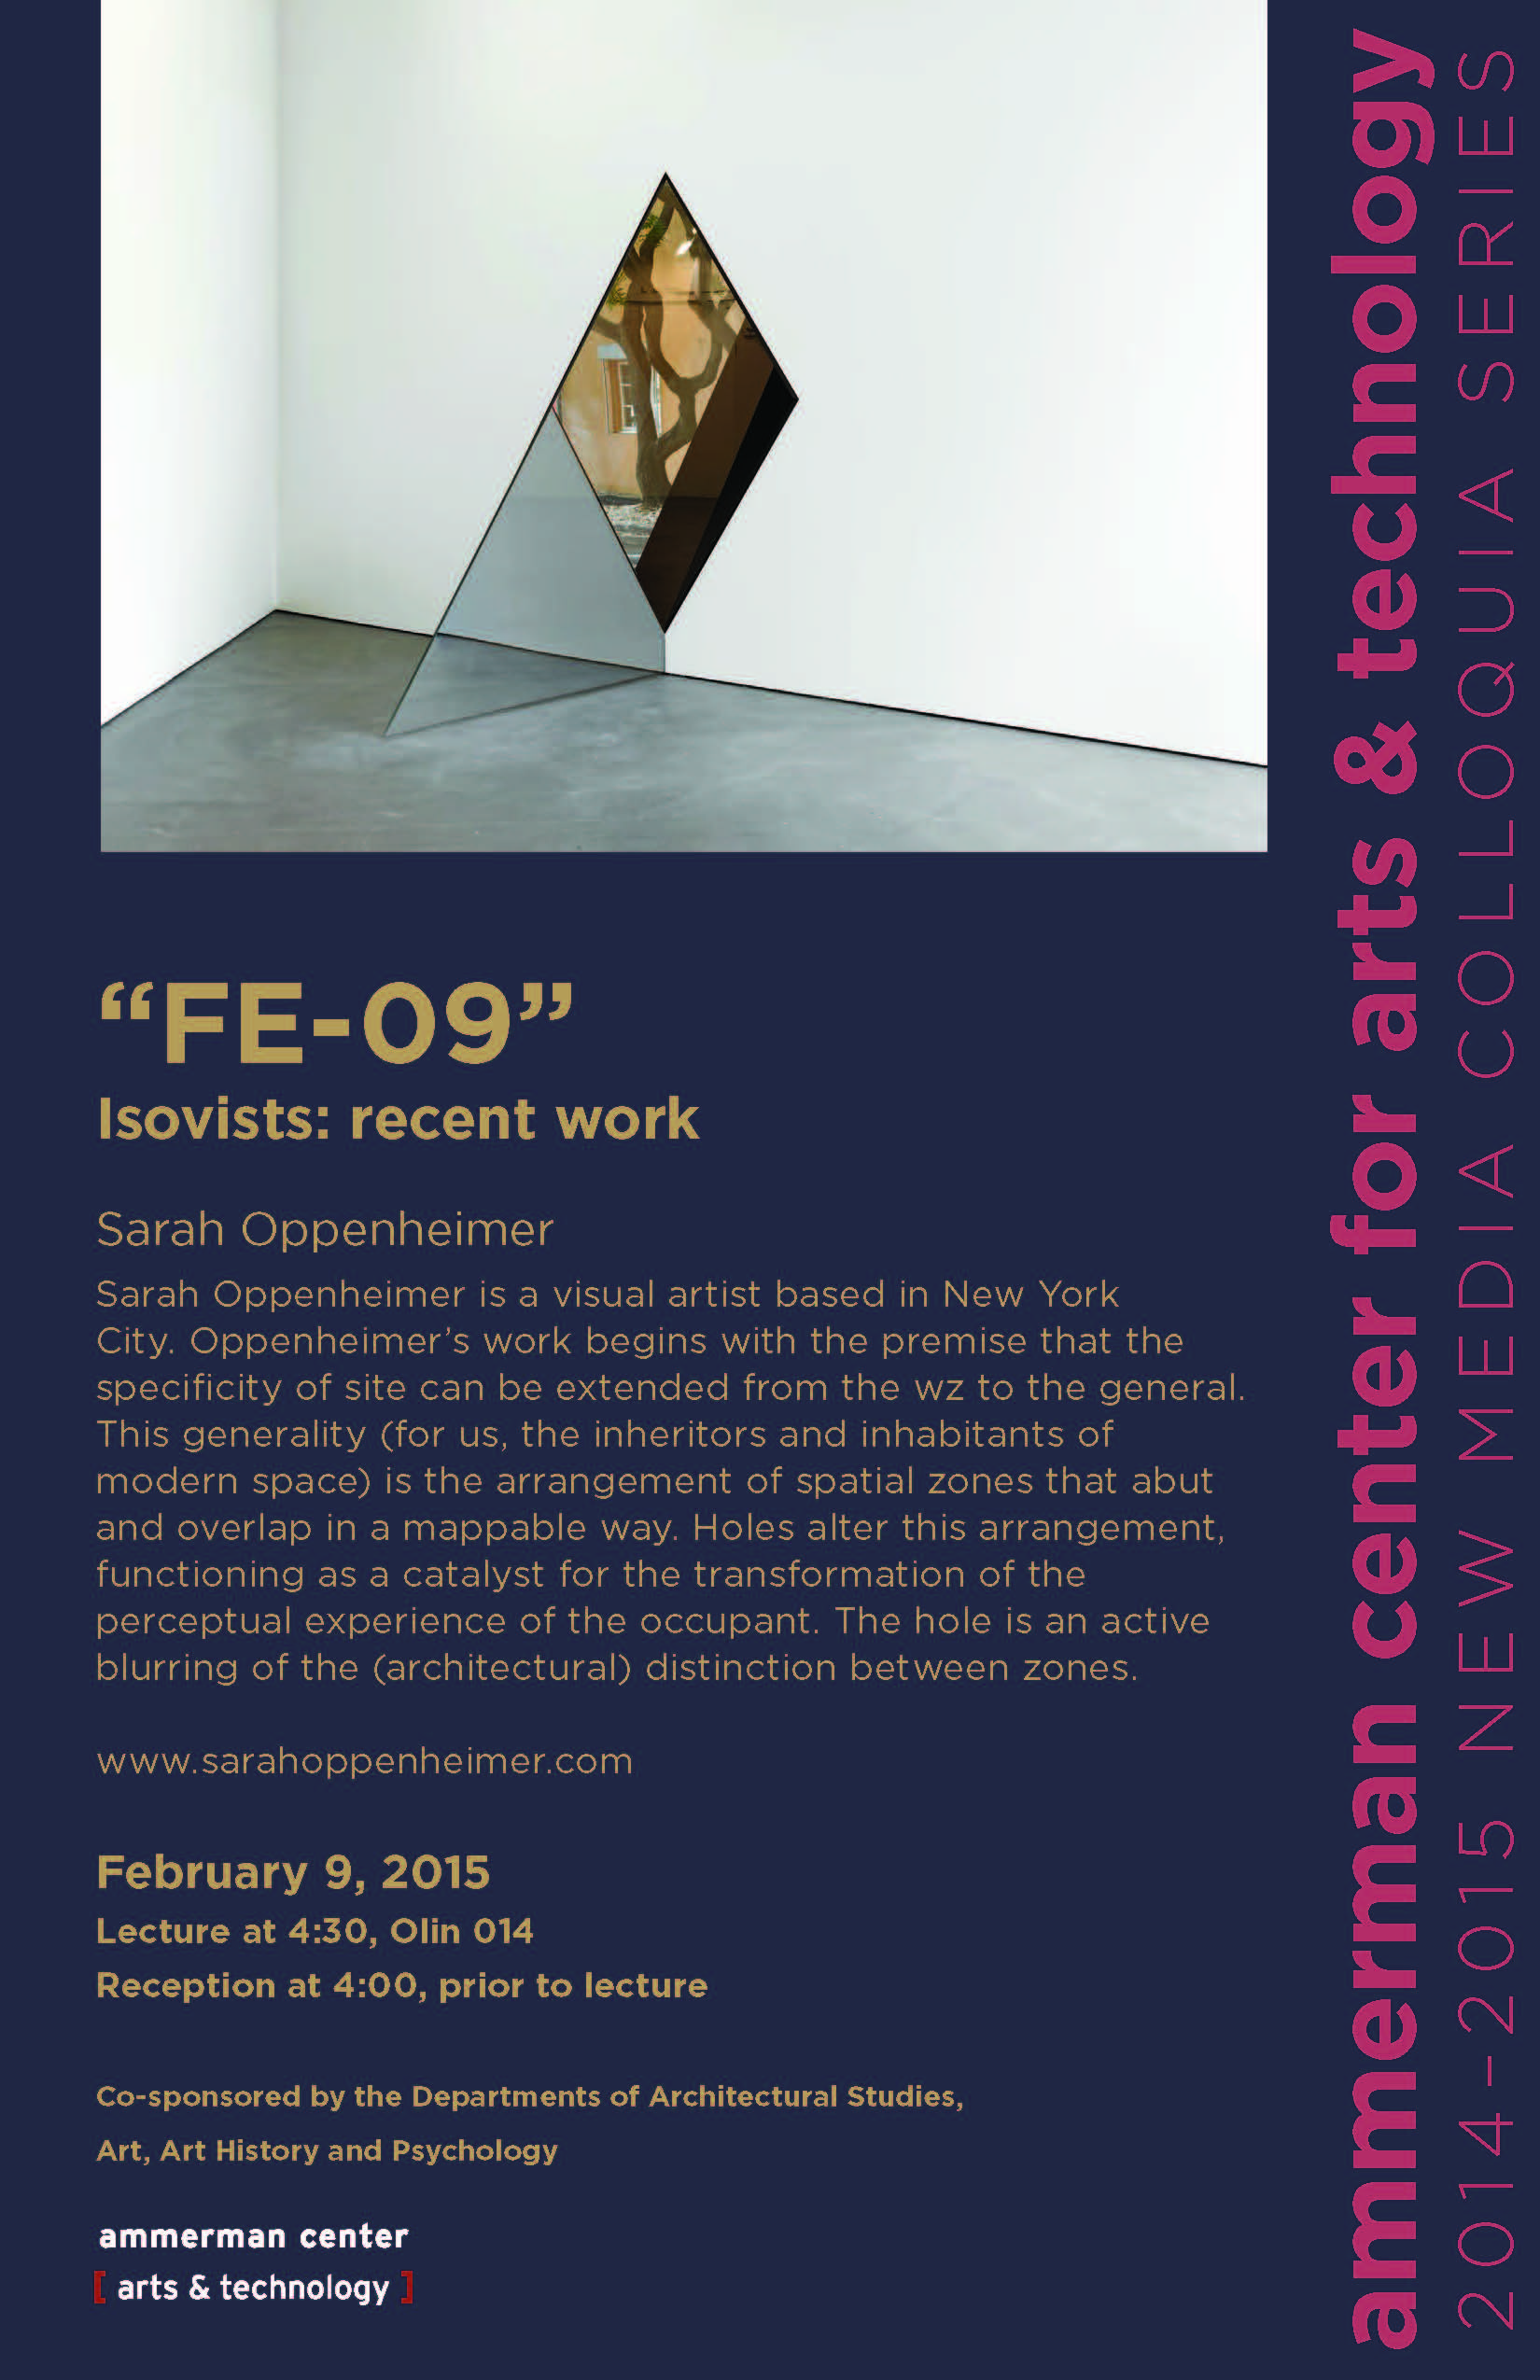 FE-09 - Isovists: recent work